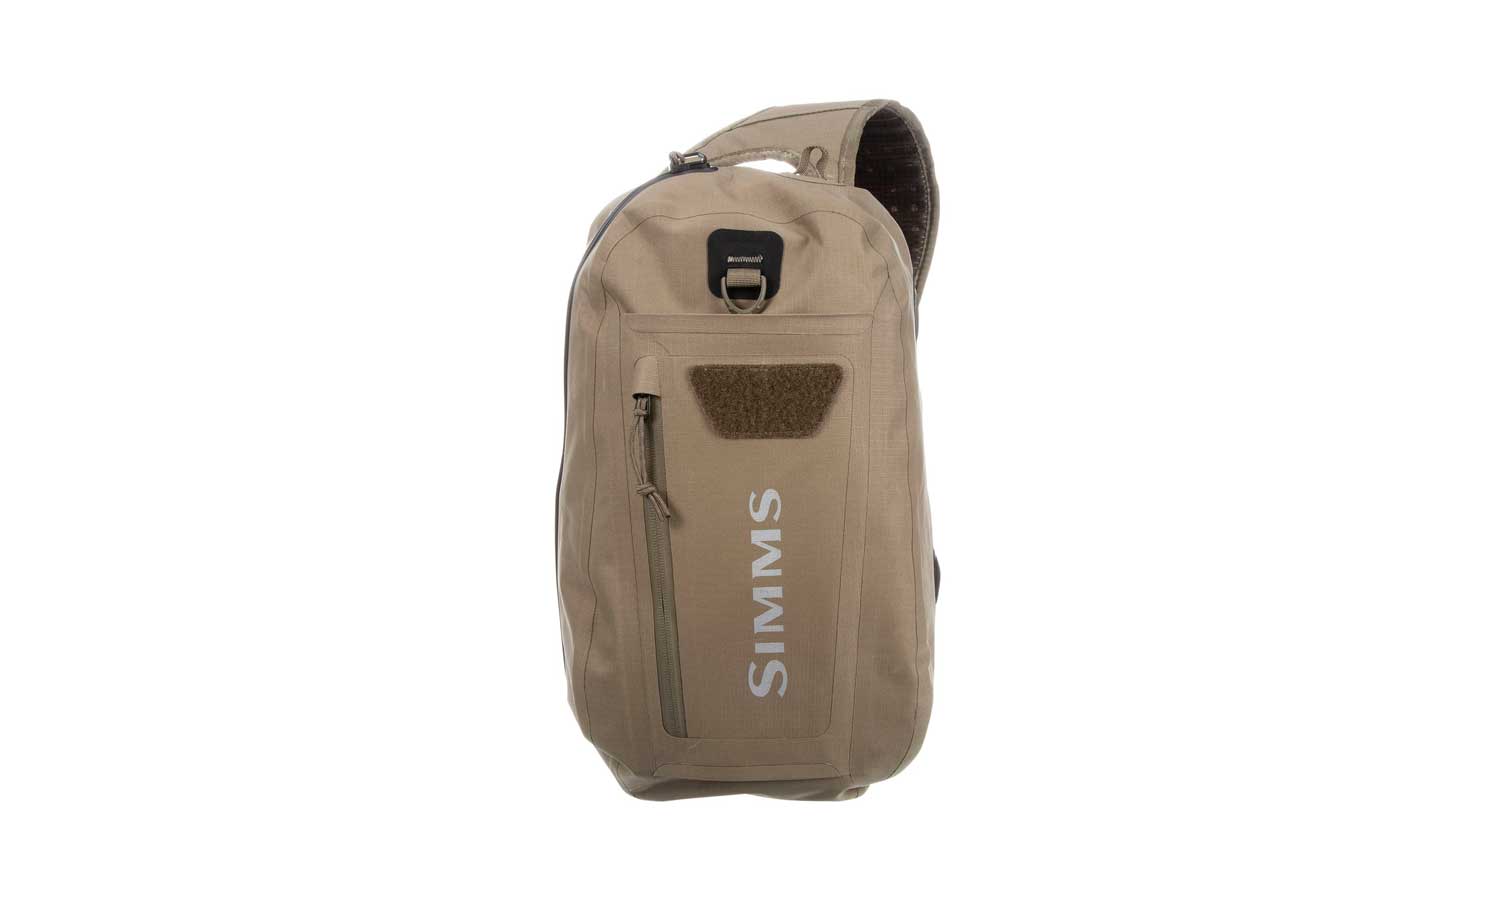 simms sling pack